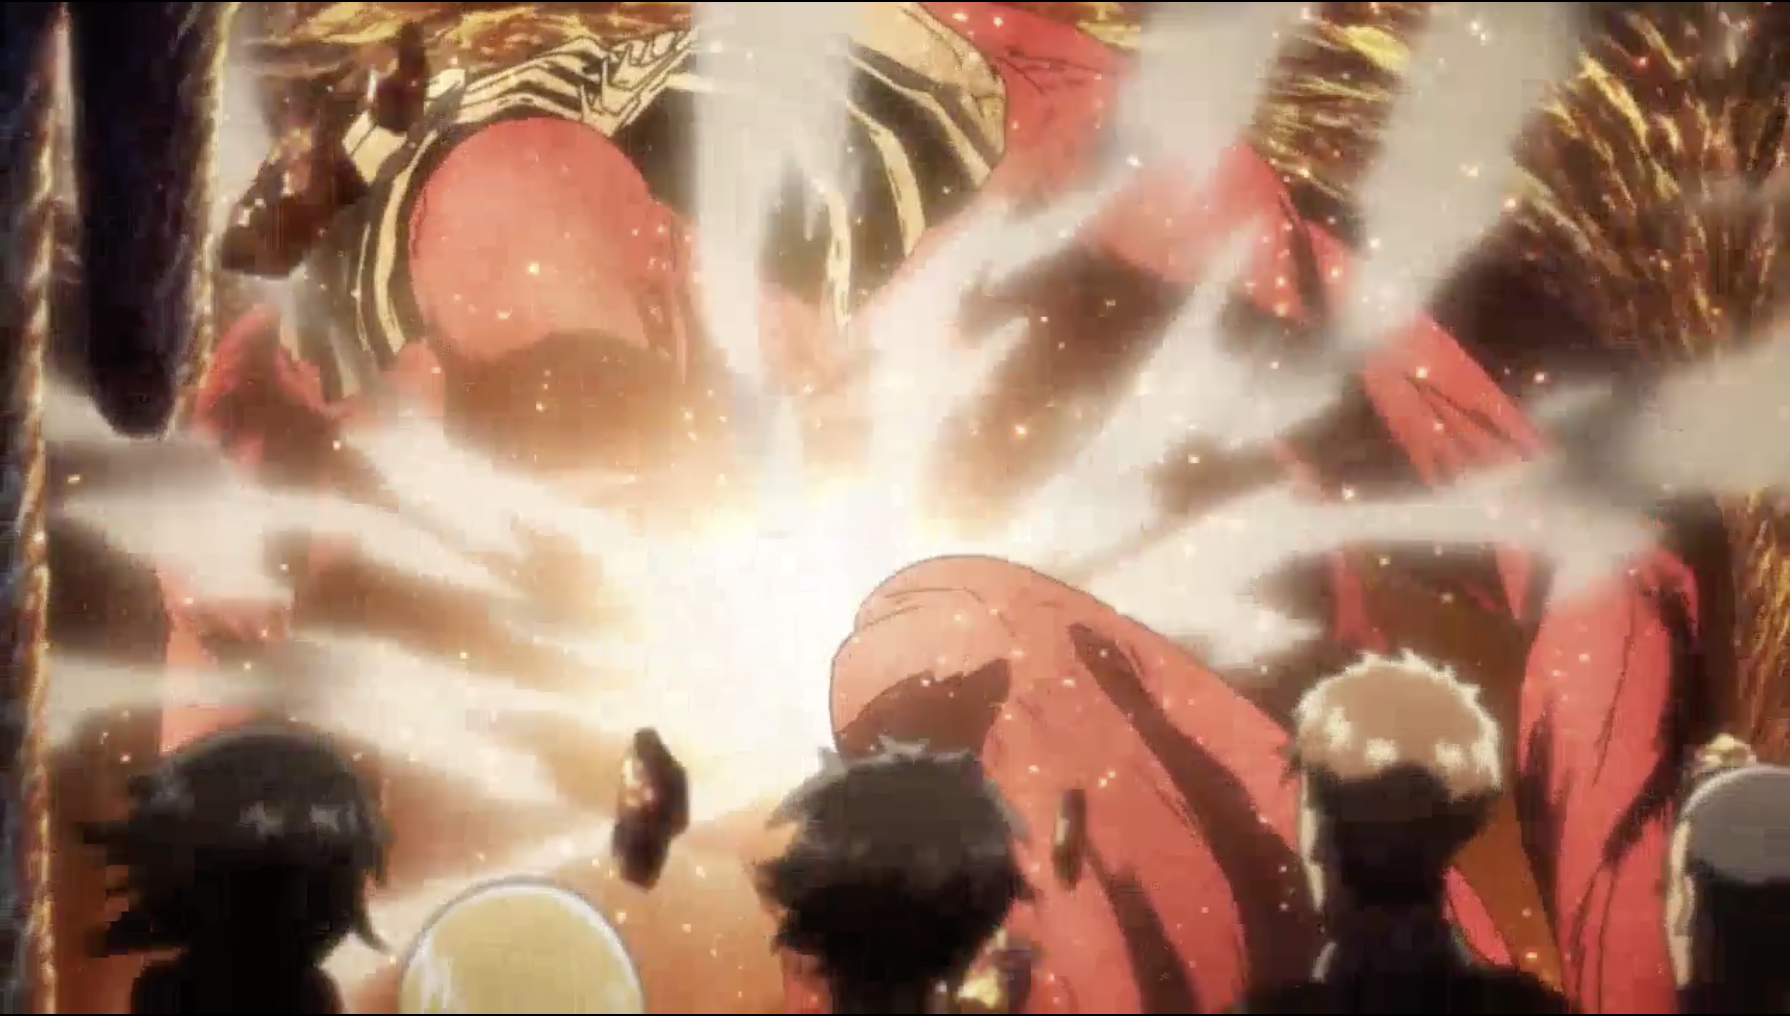 Shingeki no Kyojin Season 3 (Attack on Titan Season 3) - Pictures